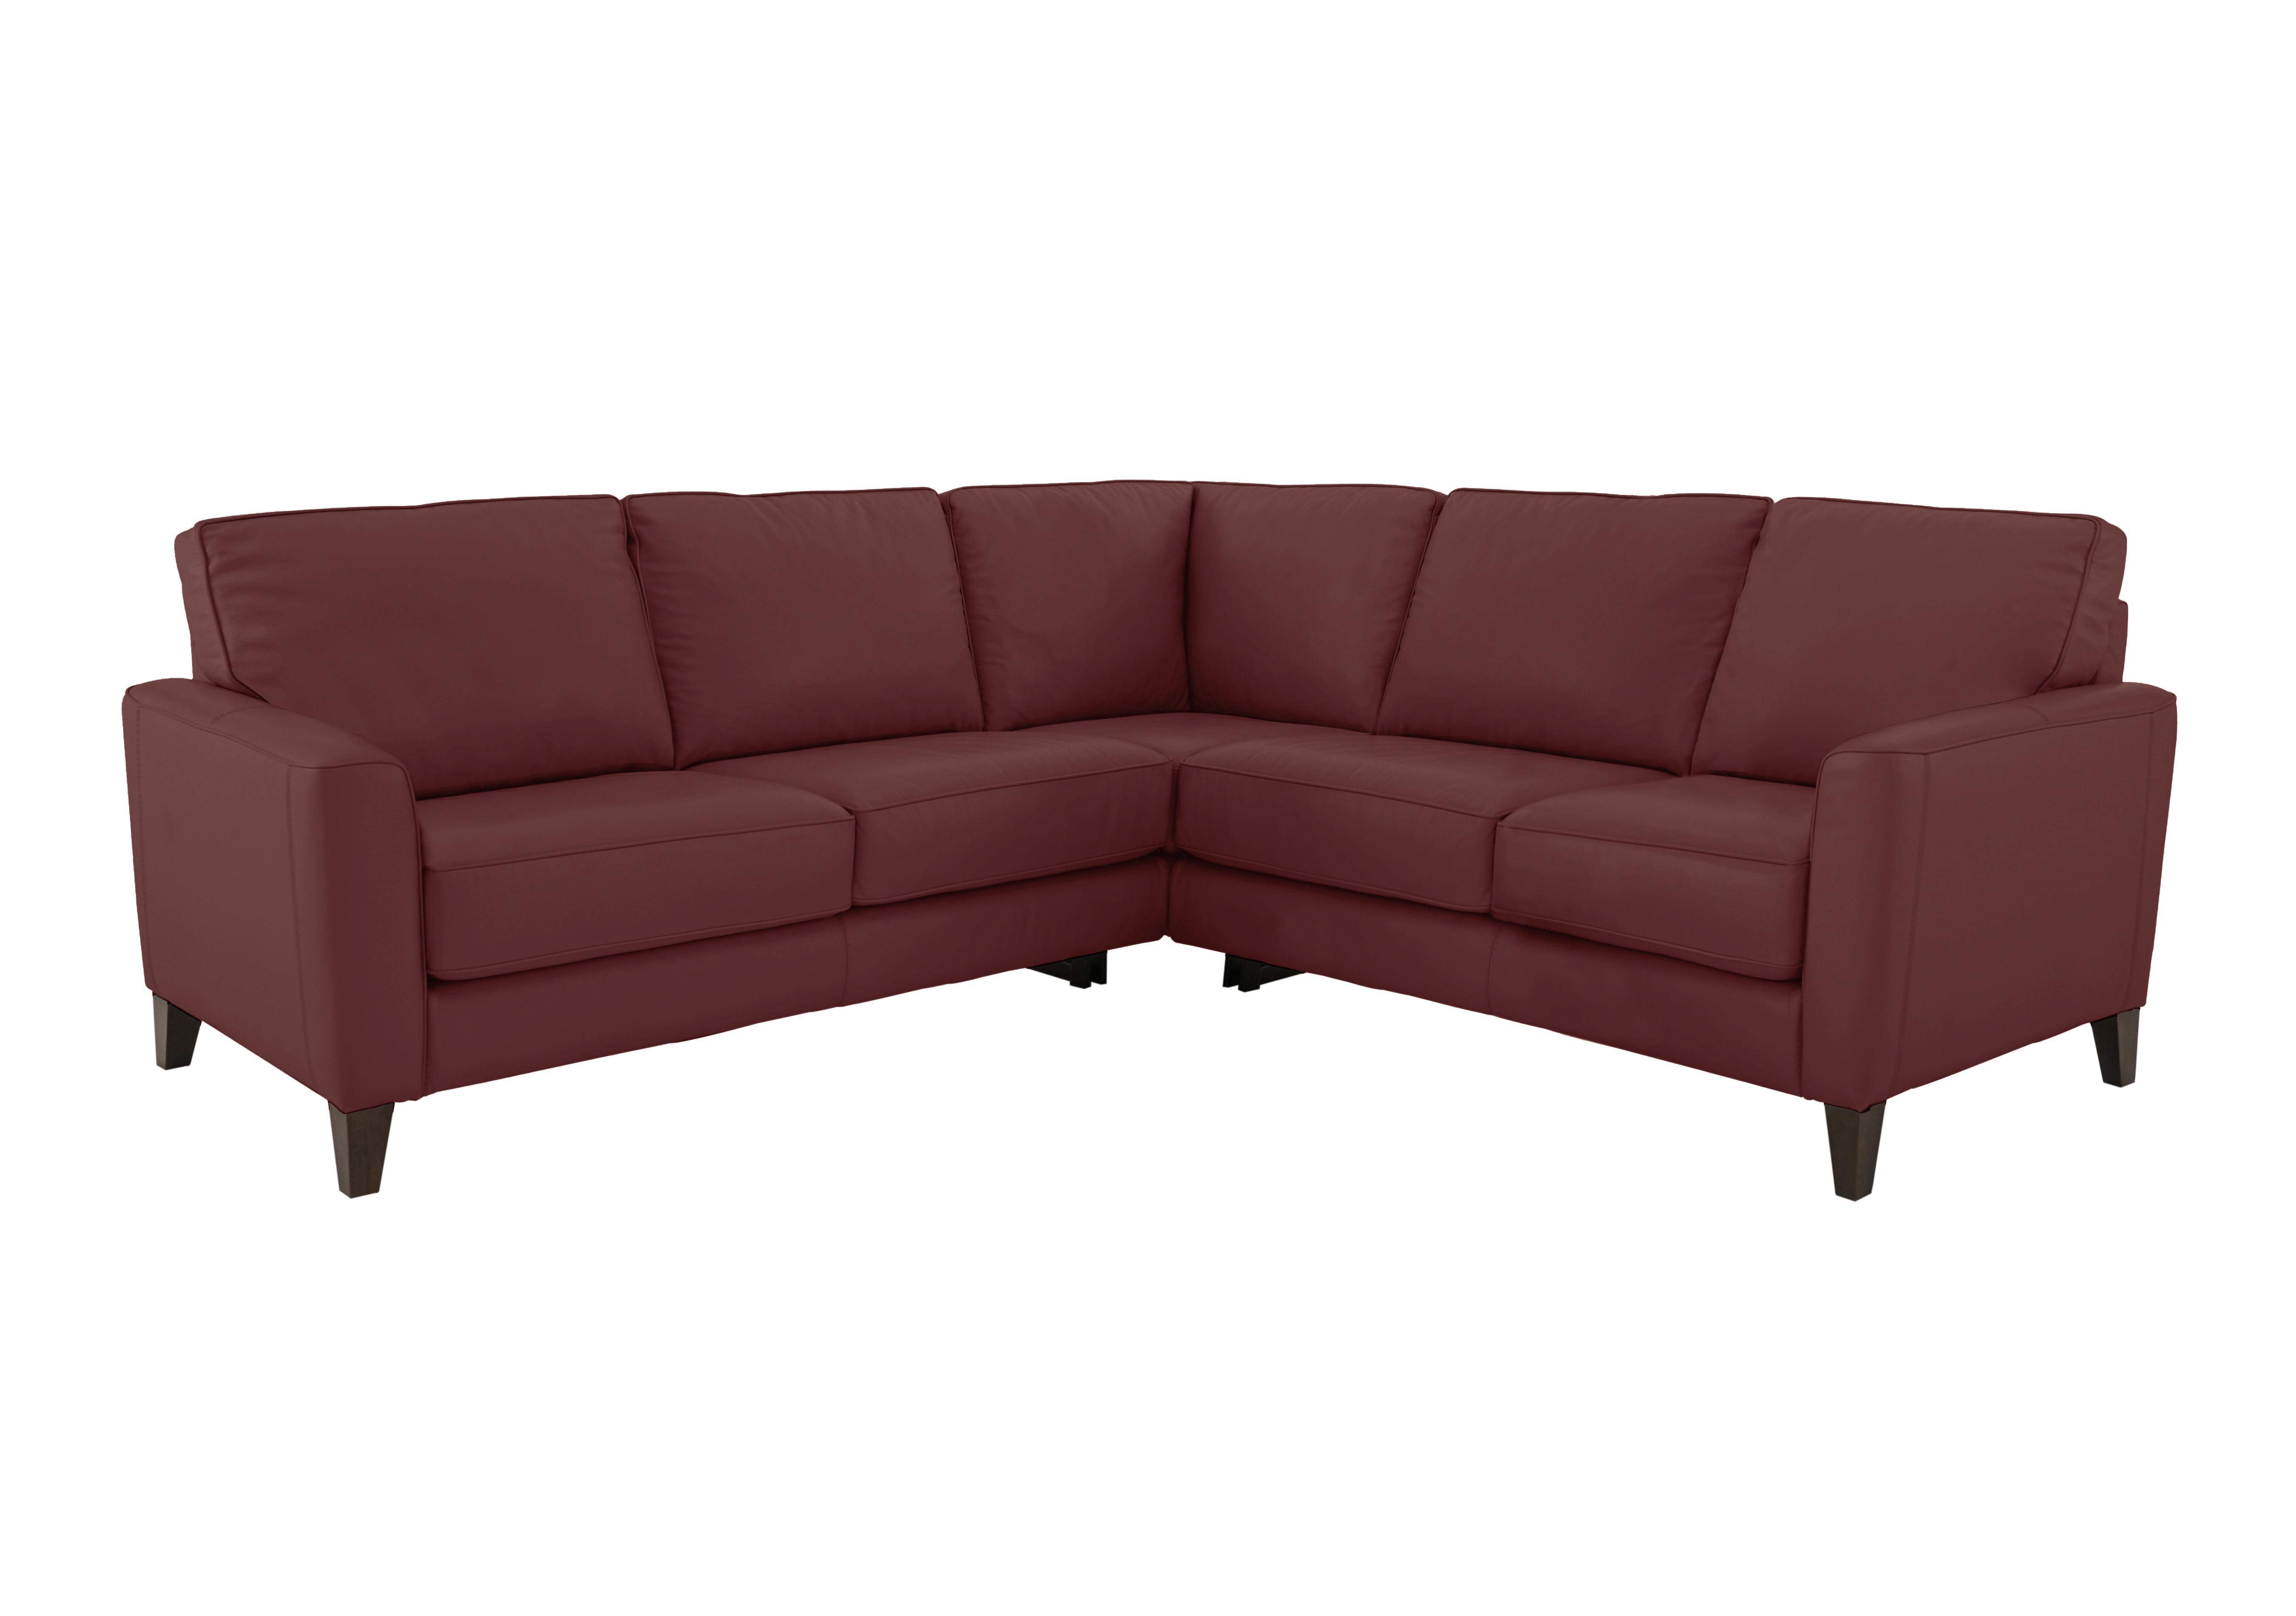 Brondby Large Leather Corner Sofa in Bv-035c Deep Red on Furniture Village